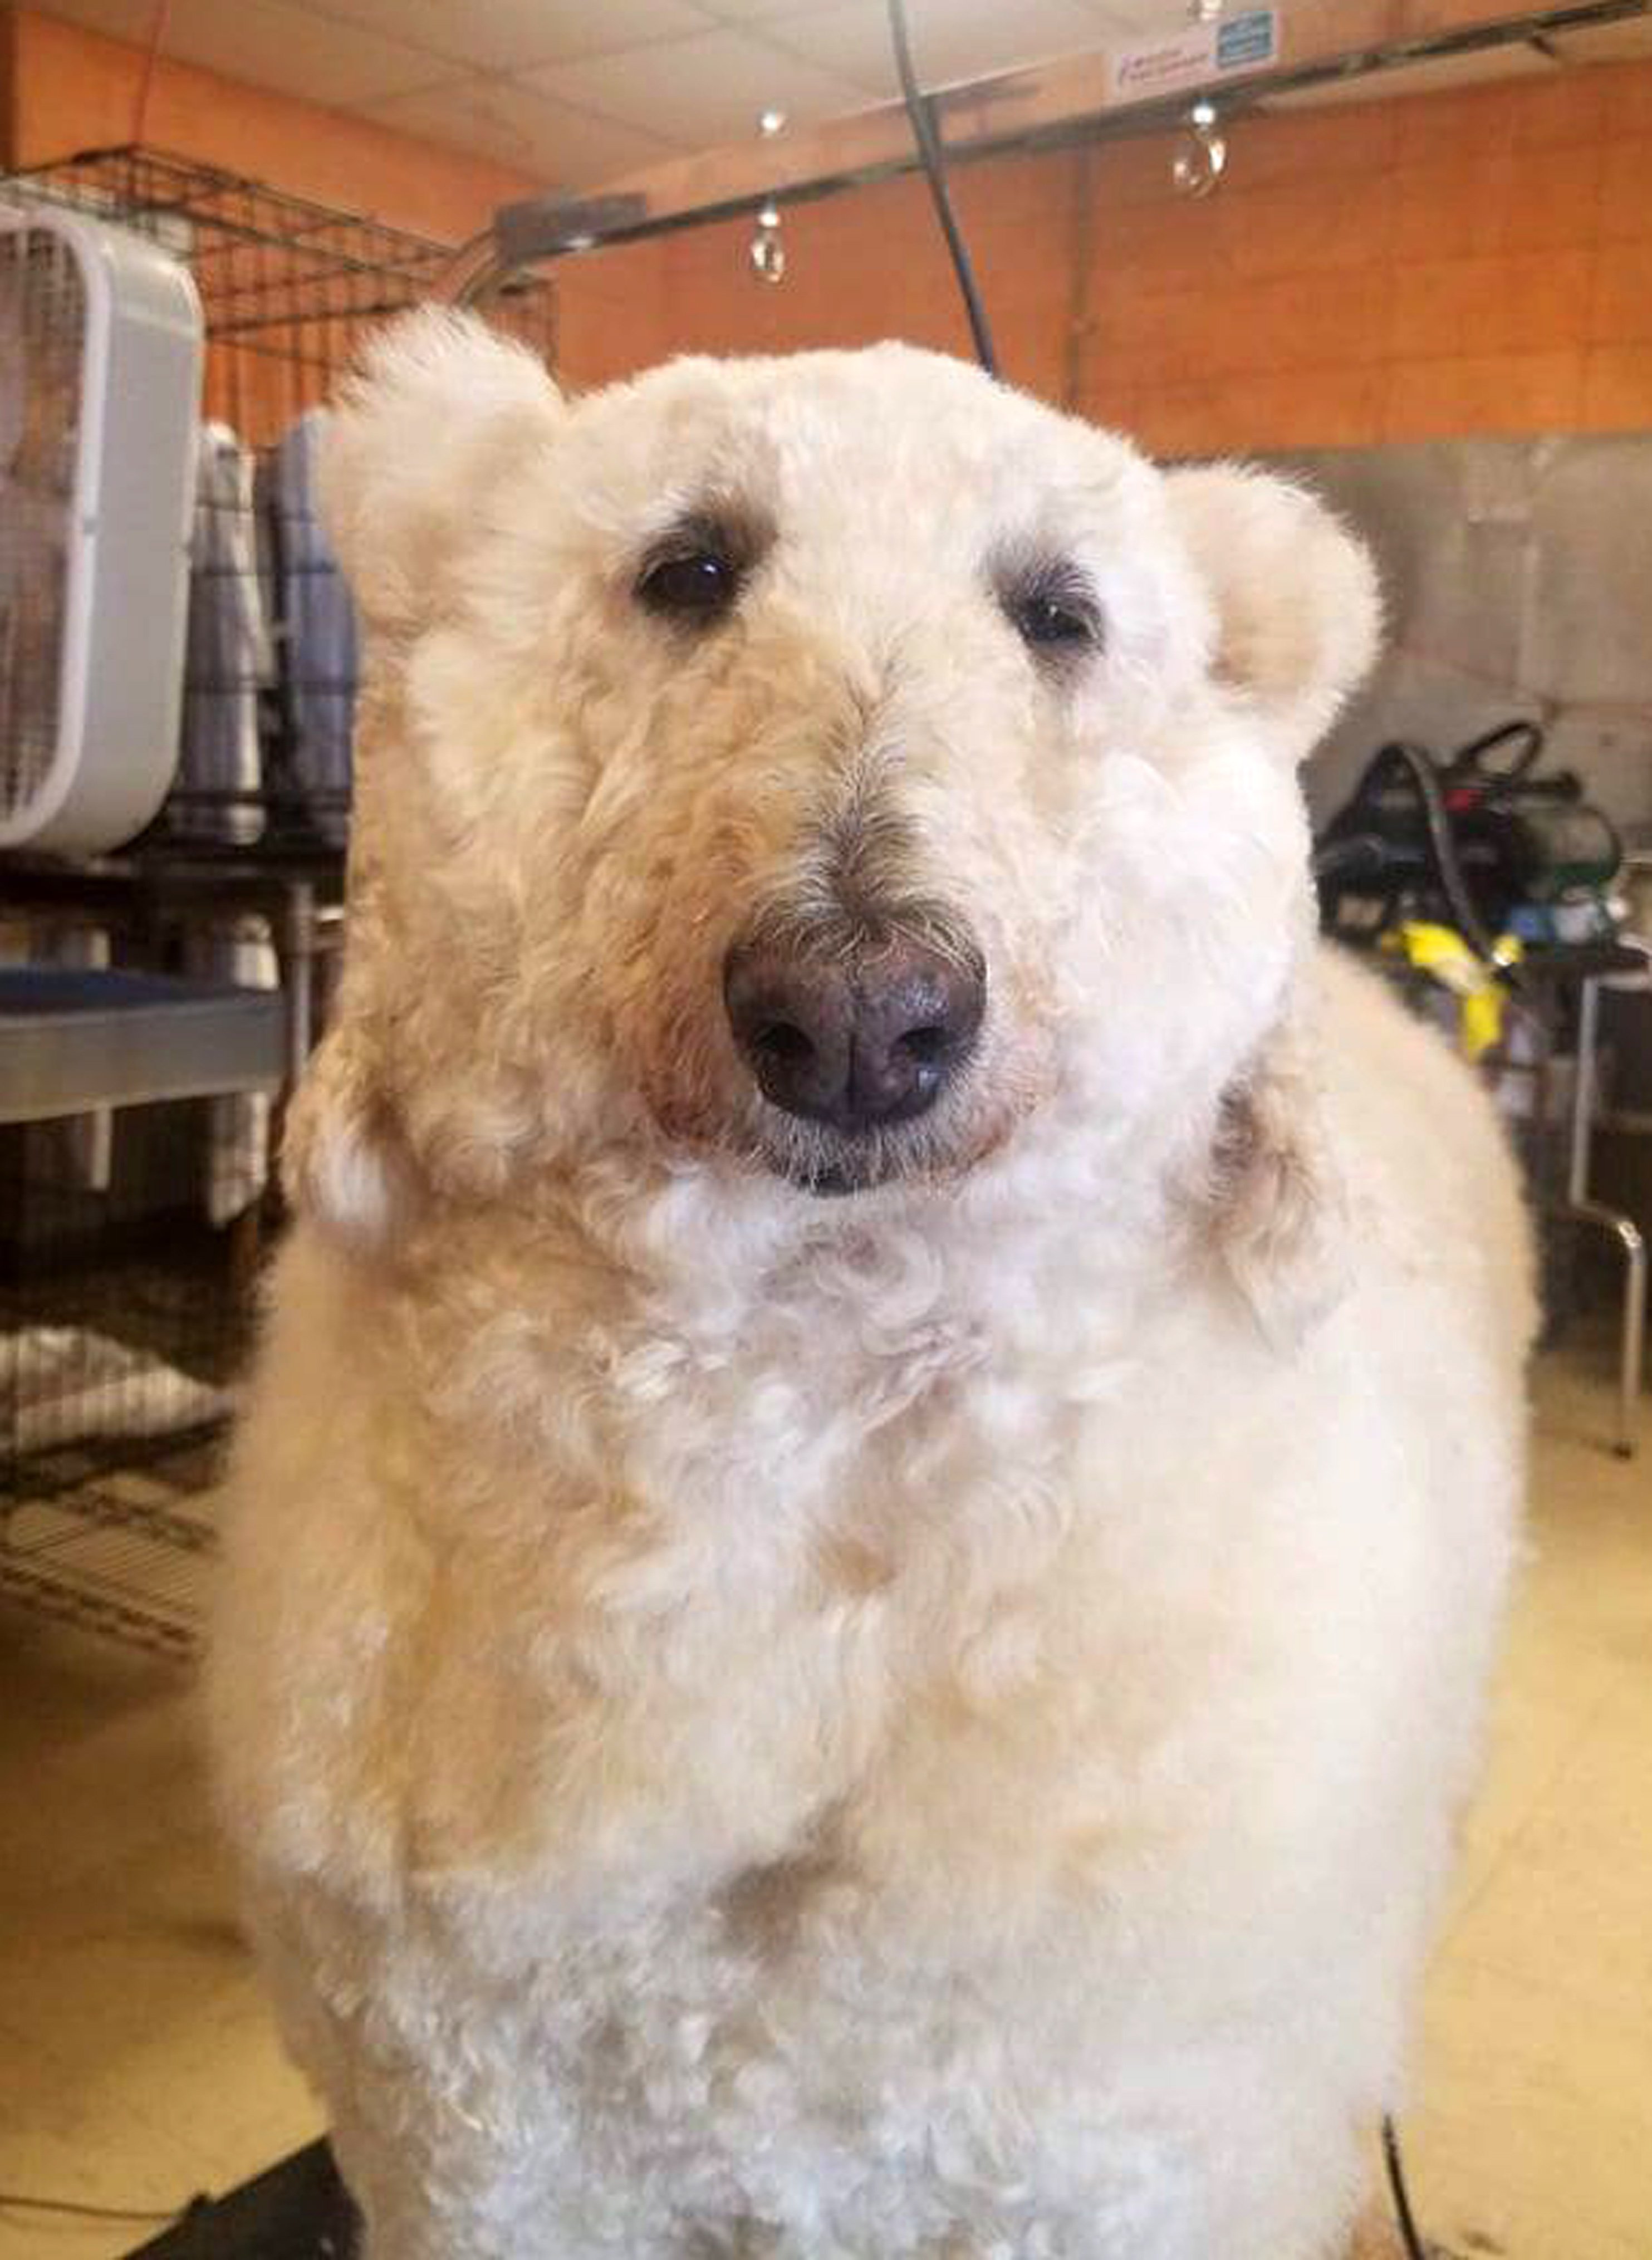 Bijou as a polar bear. | Source: Caters